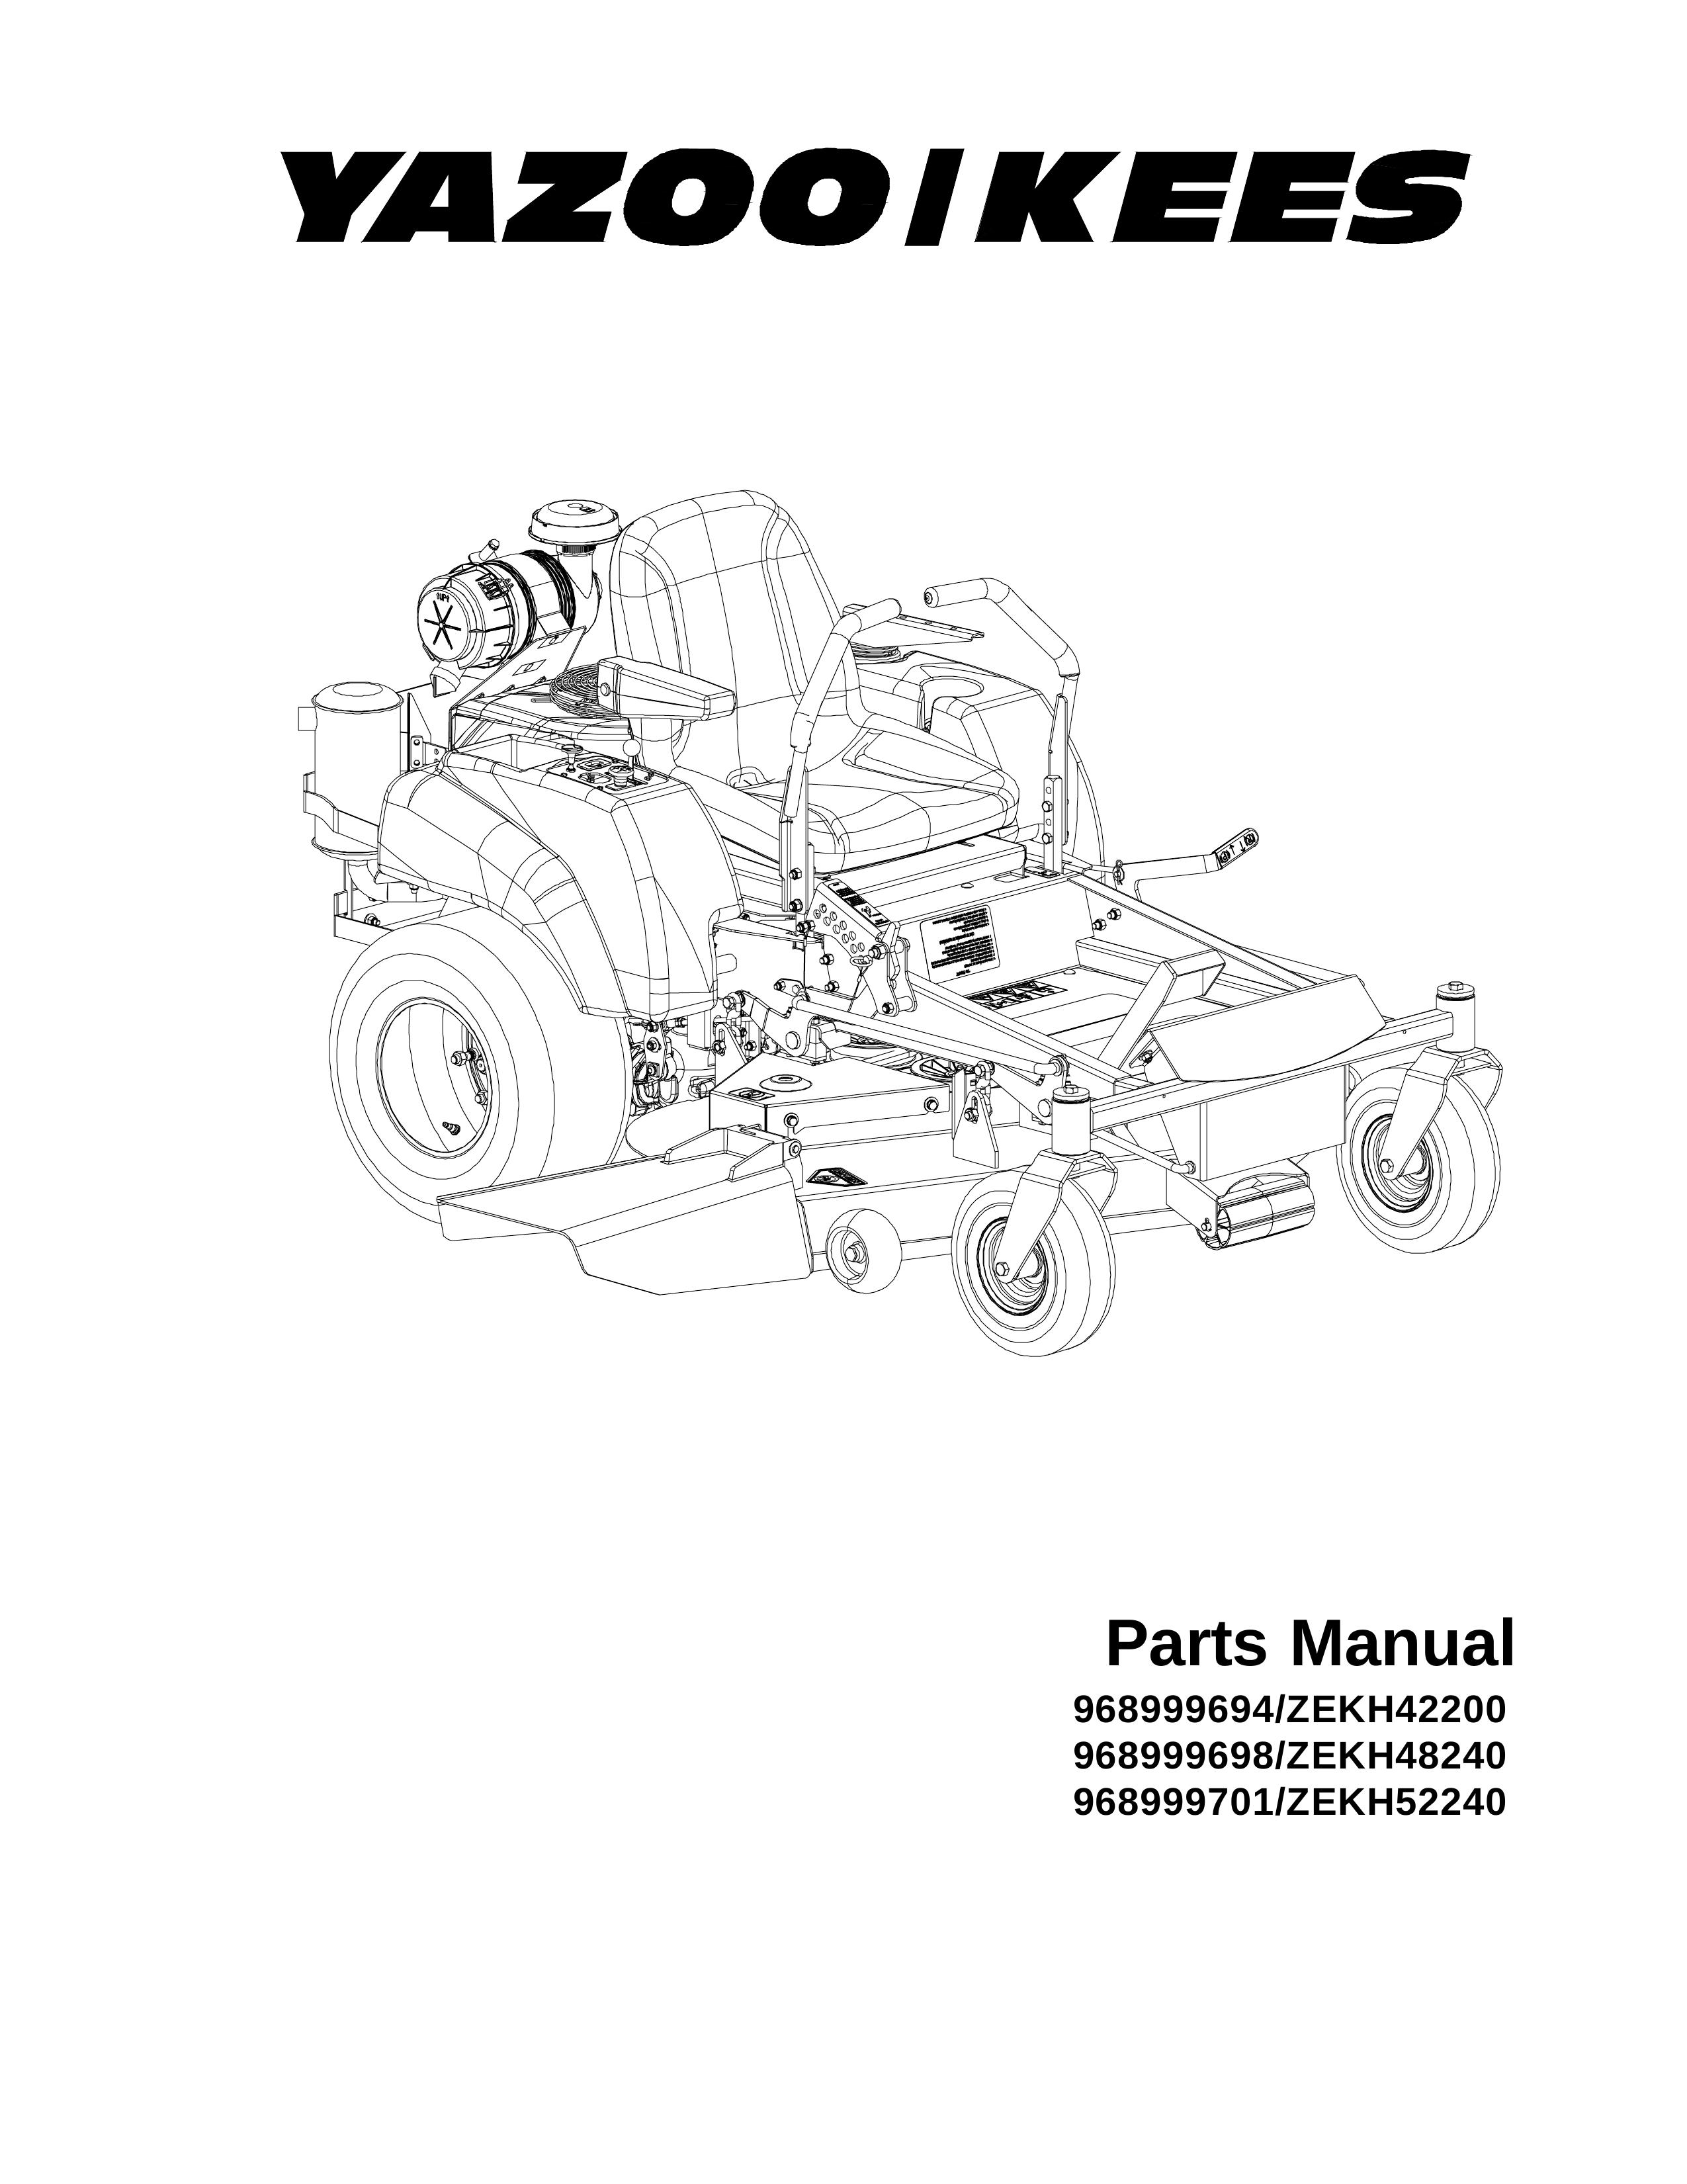 Yazoo/Kees 968999701/ZEKH52240 Lawn Mower User Manual